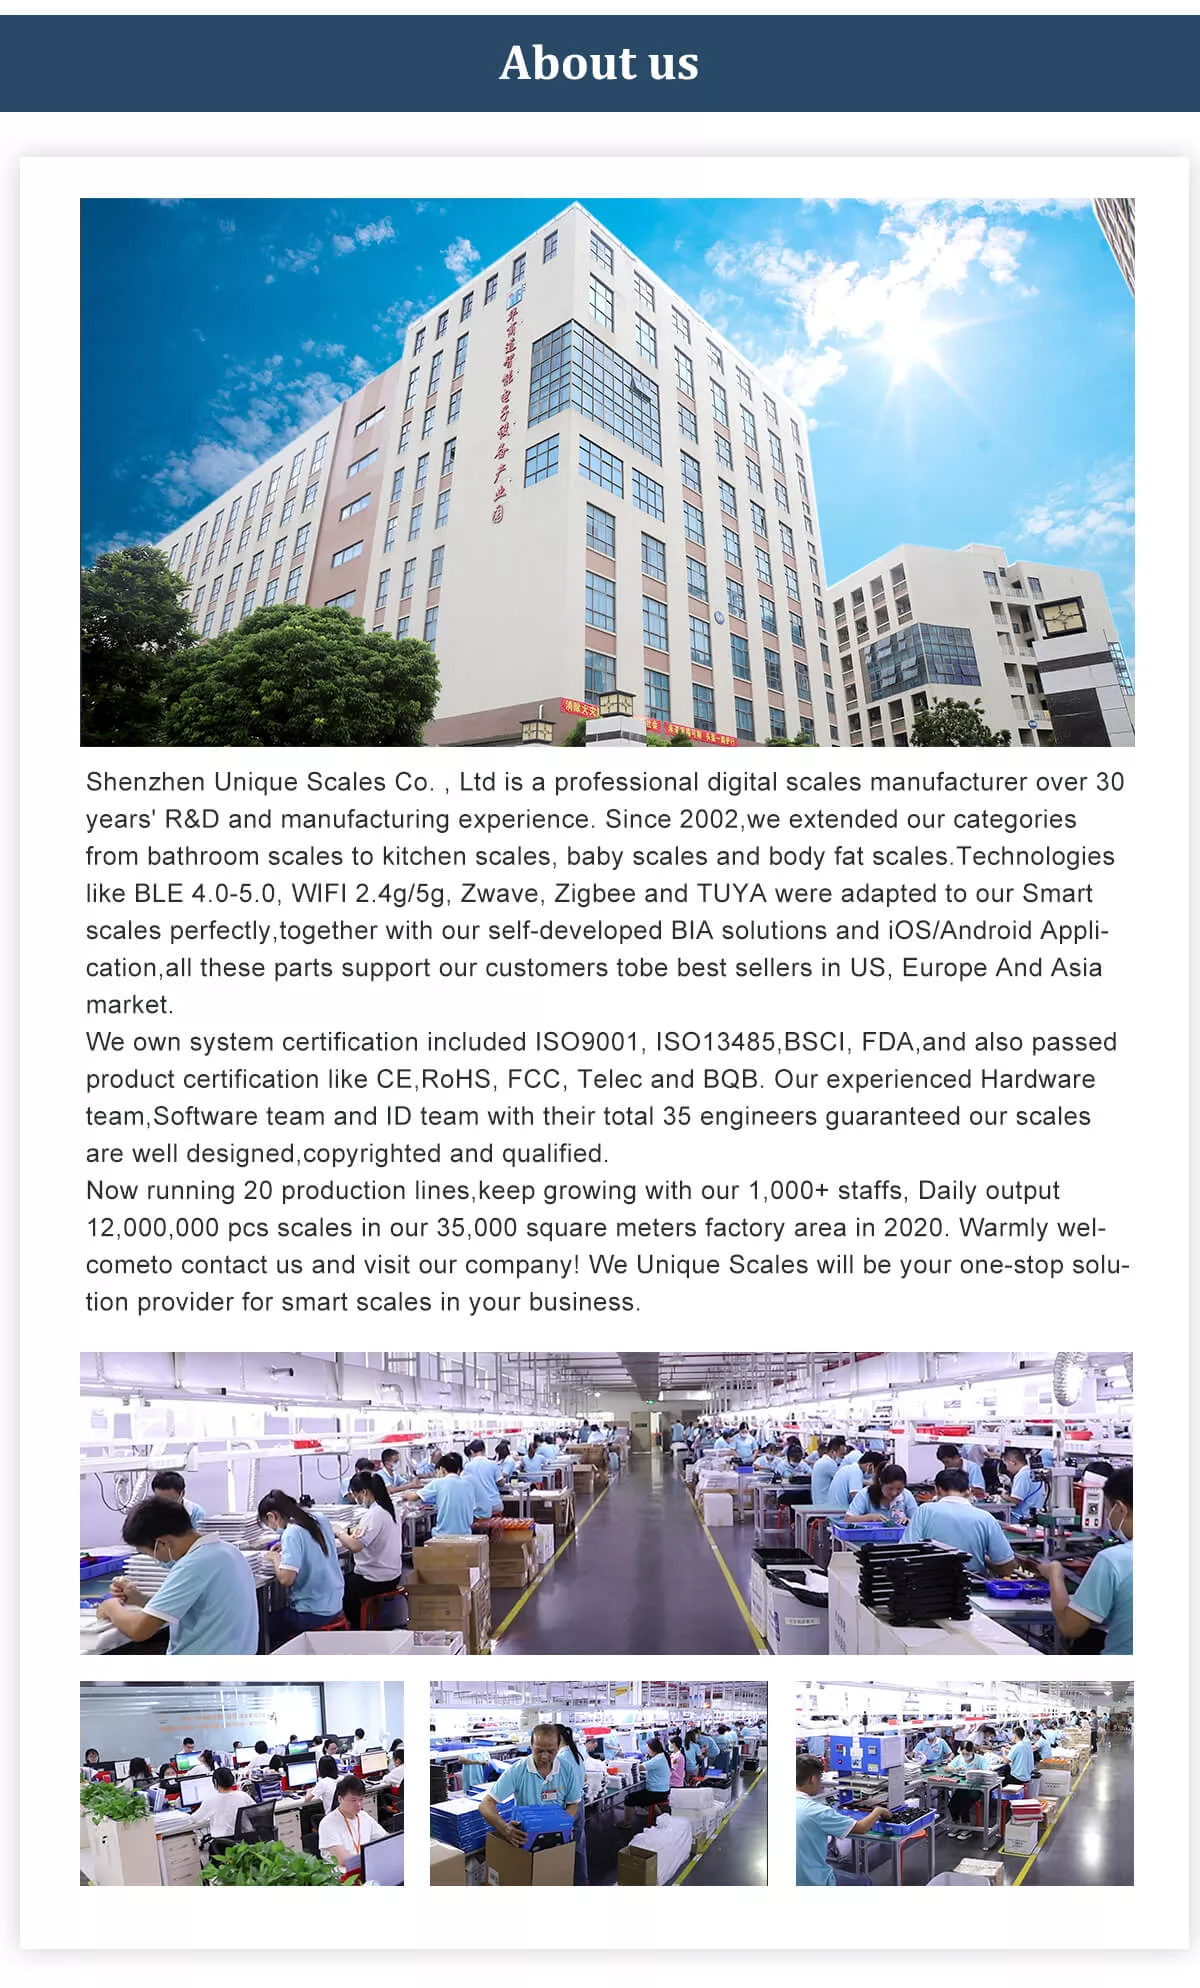 Shenzhen Unique Scales Co., Ltd is a professional digital scales manufacturer